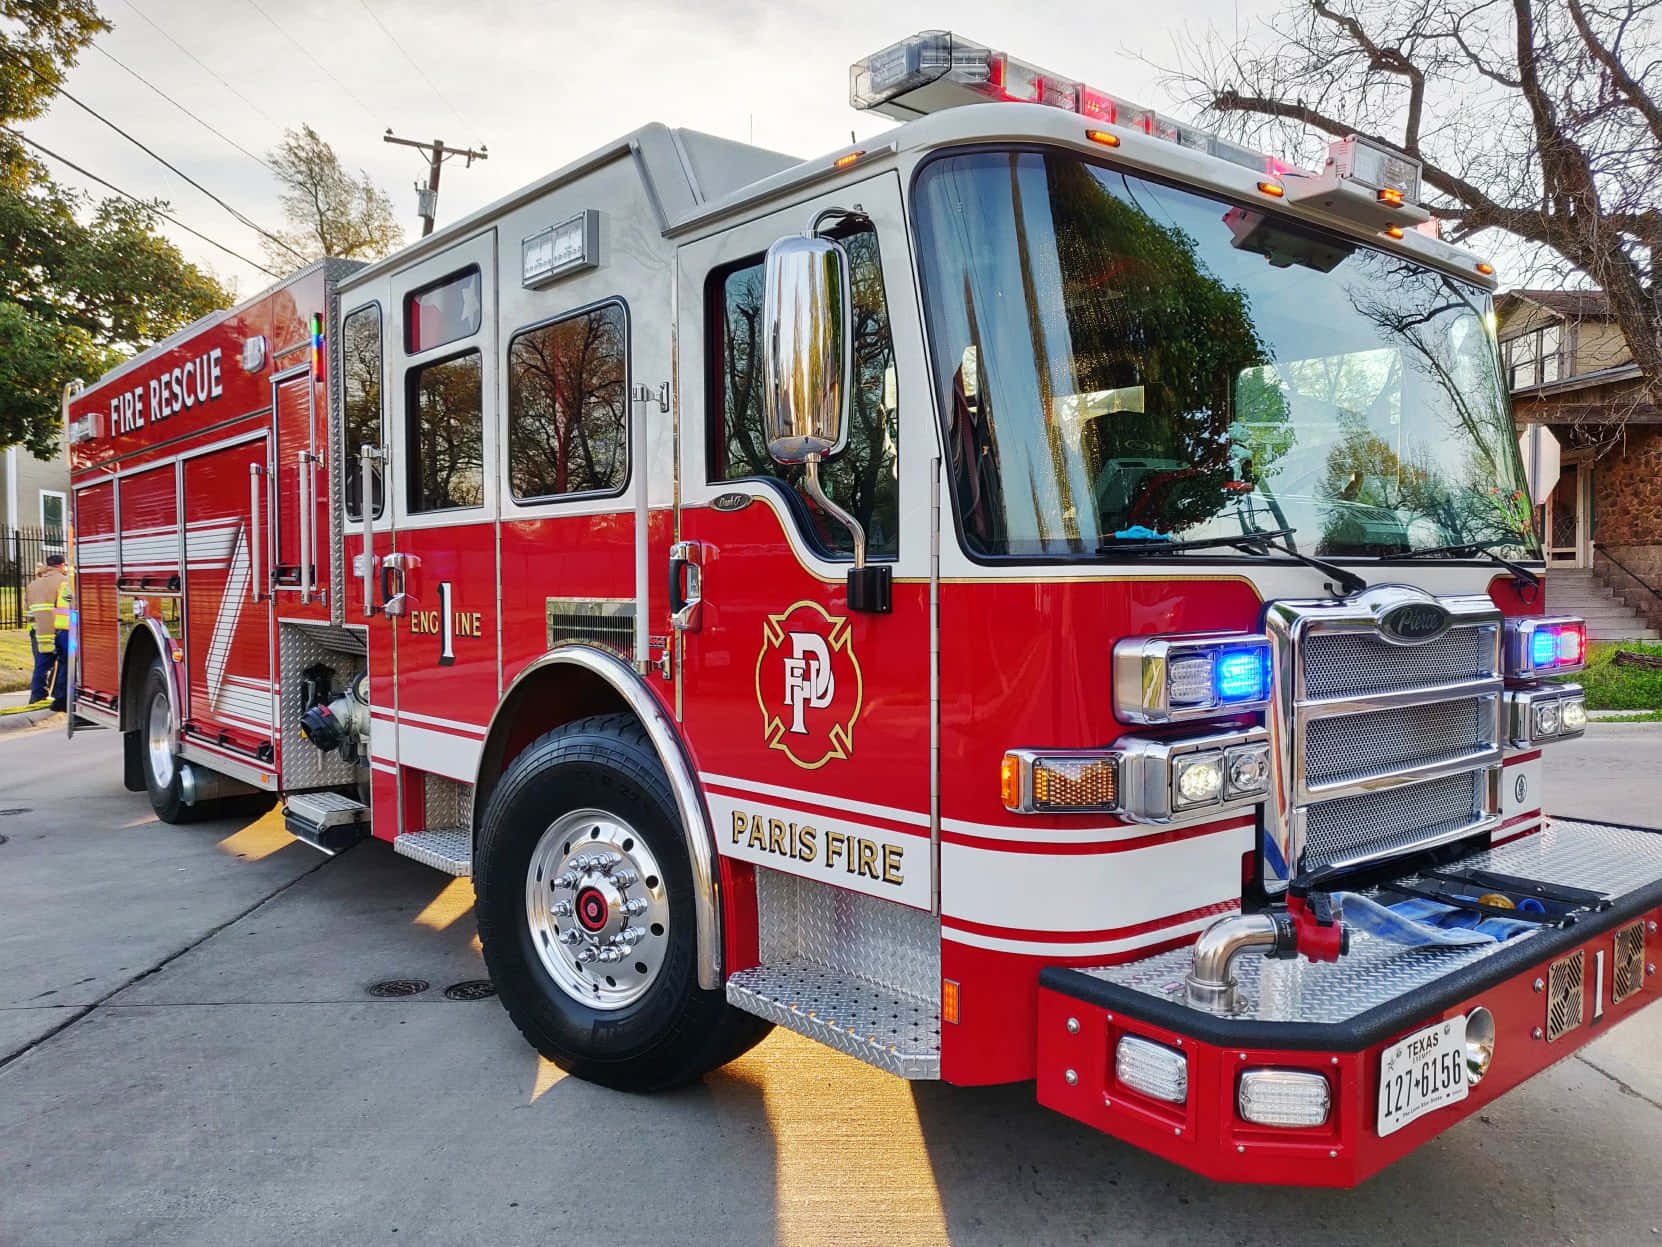 Fire truck tackling a four-alarm blaze